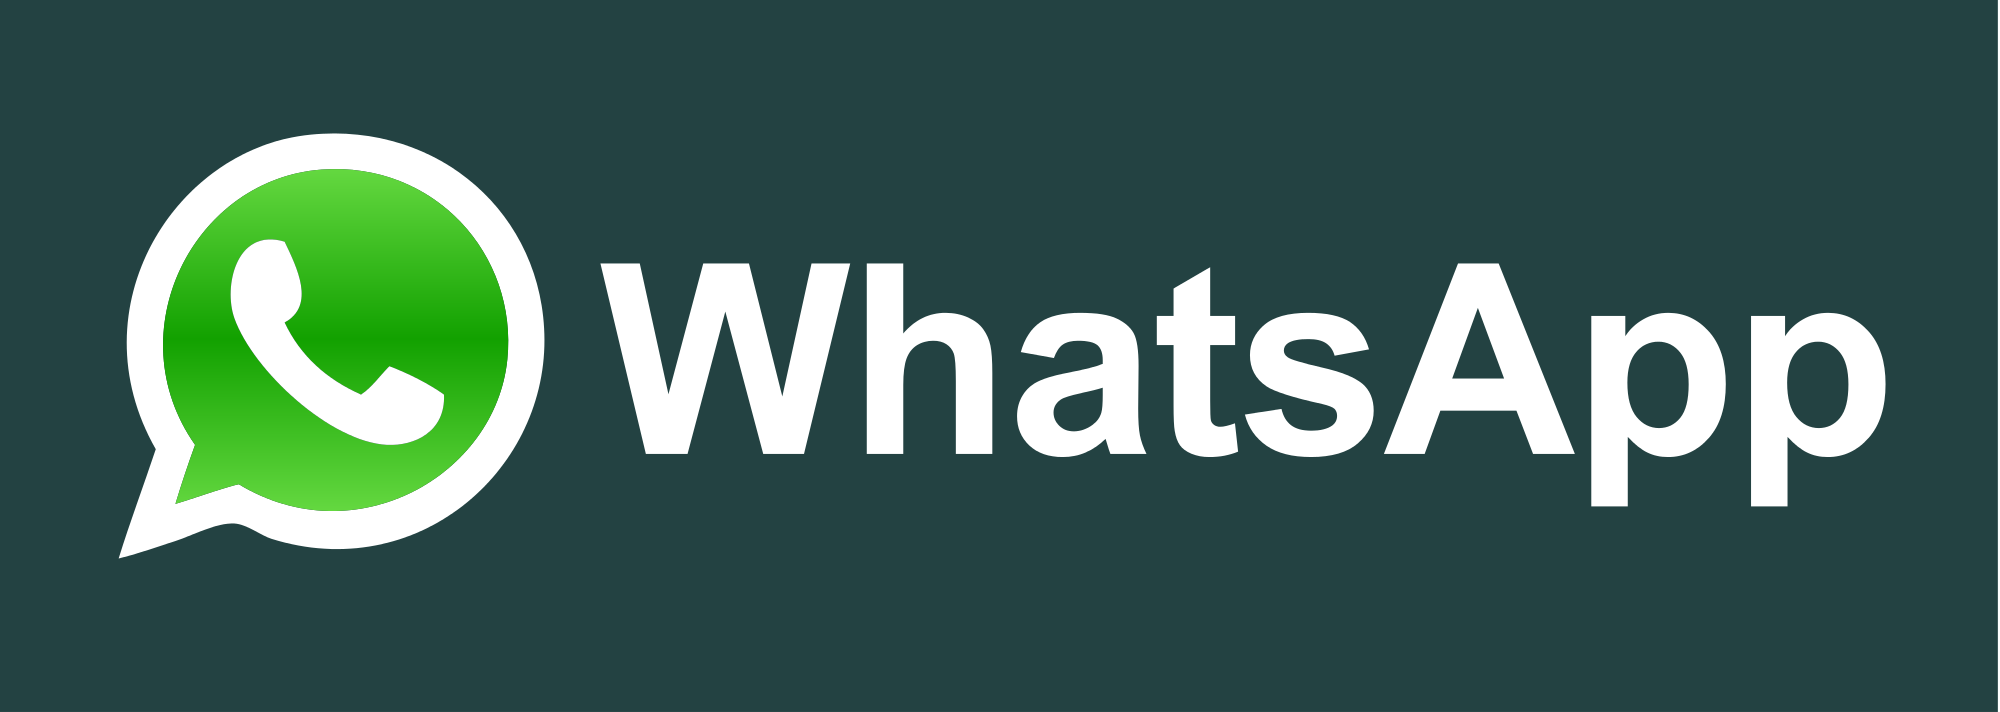 whatsapp logo - Whatsapp Logo